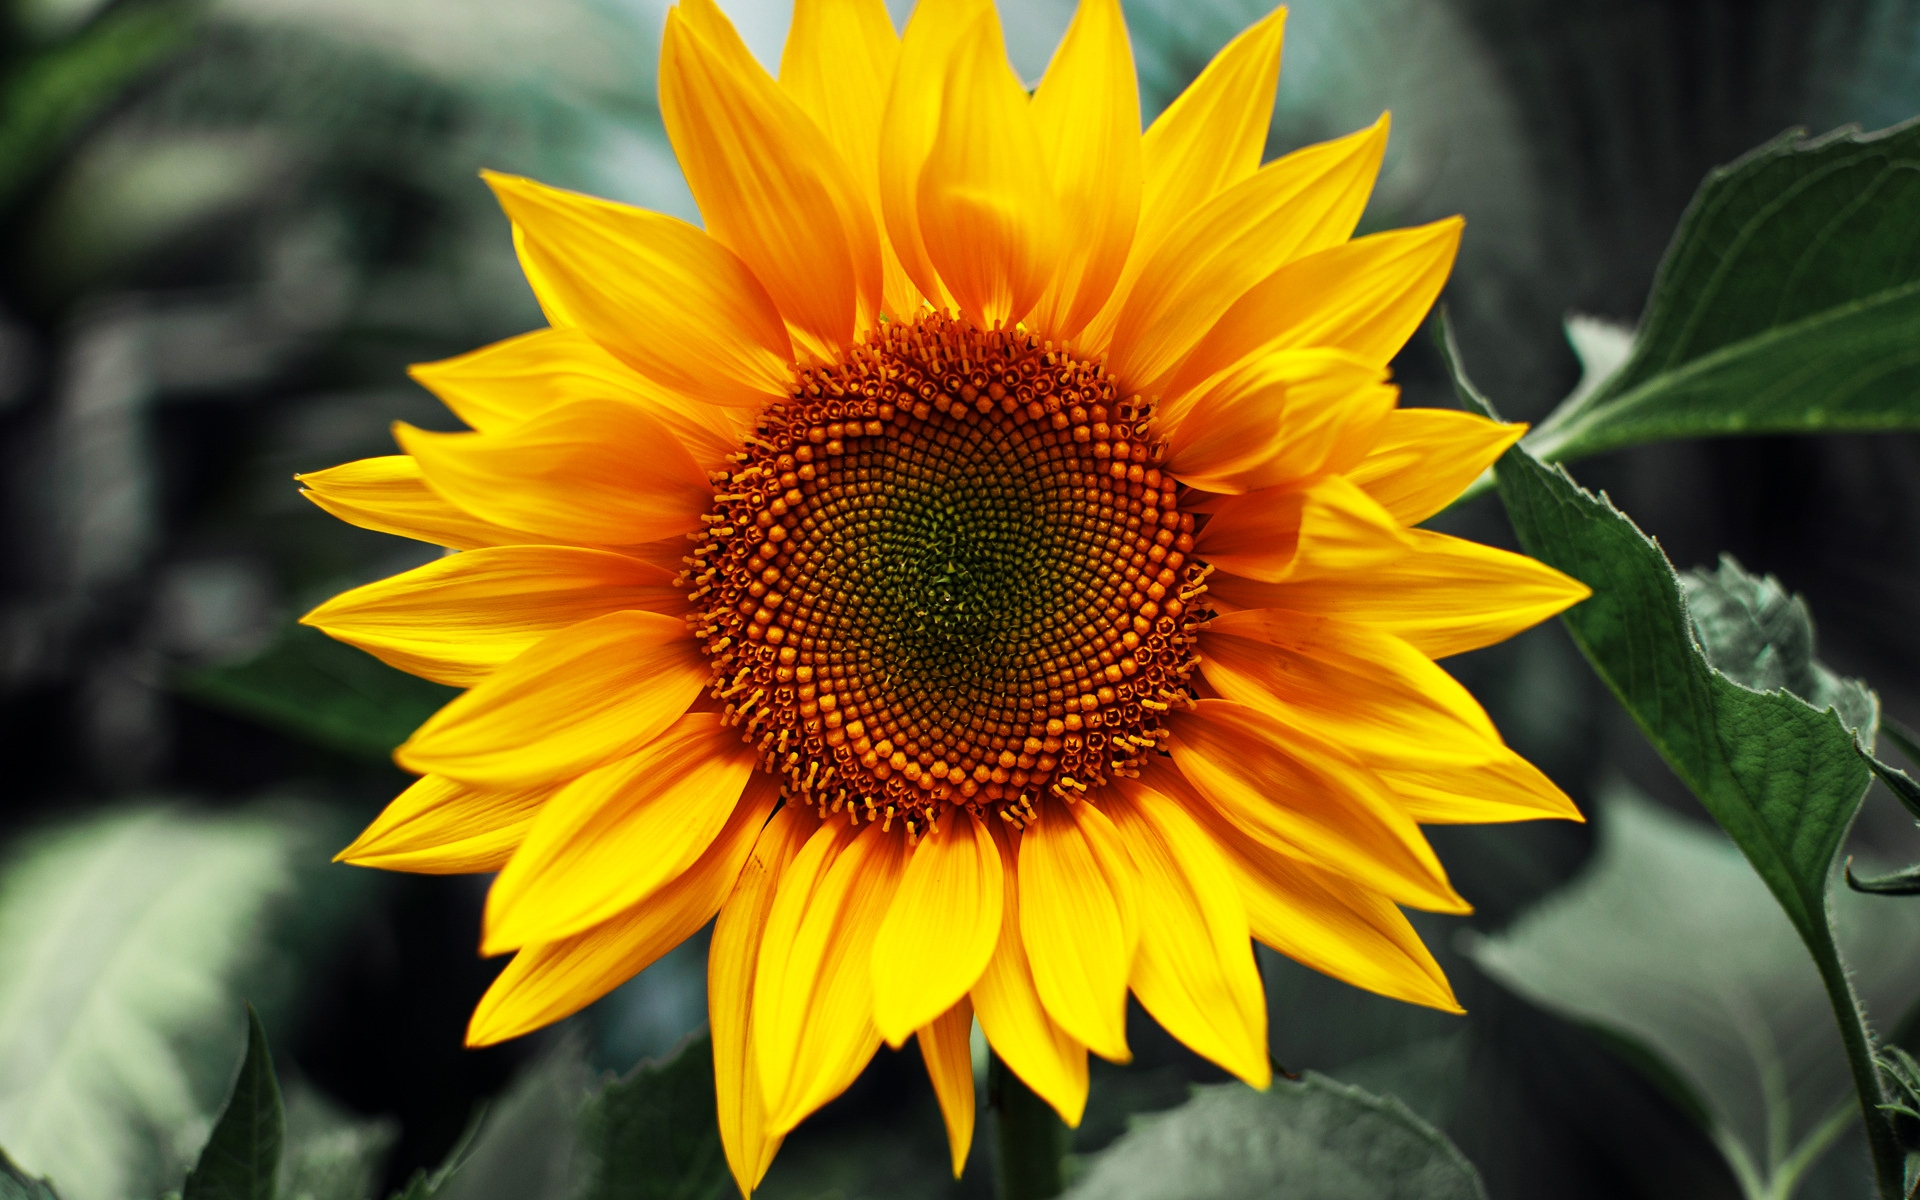 Sunflower #2